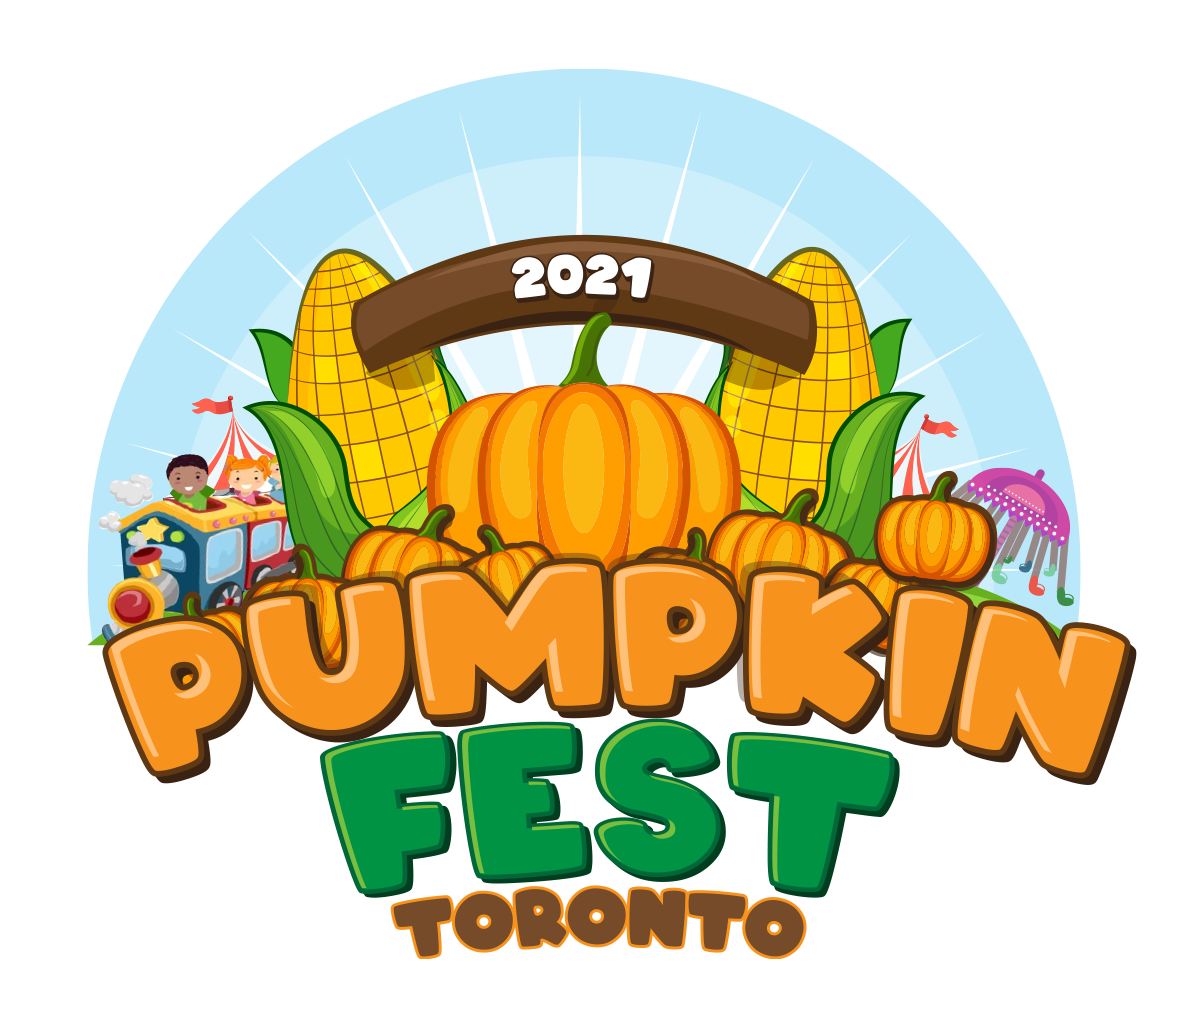 Toronto Pumpkinfest